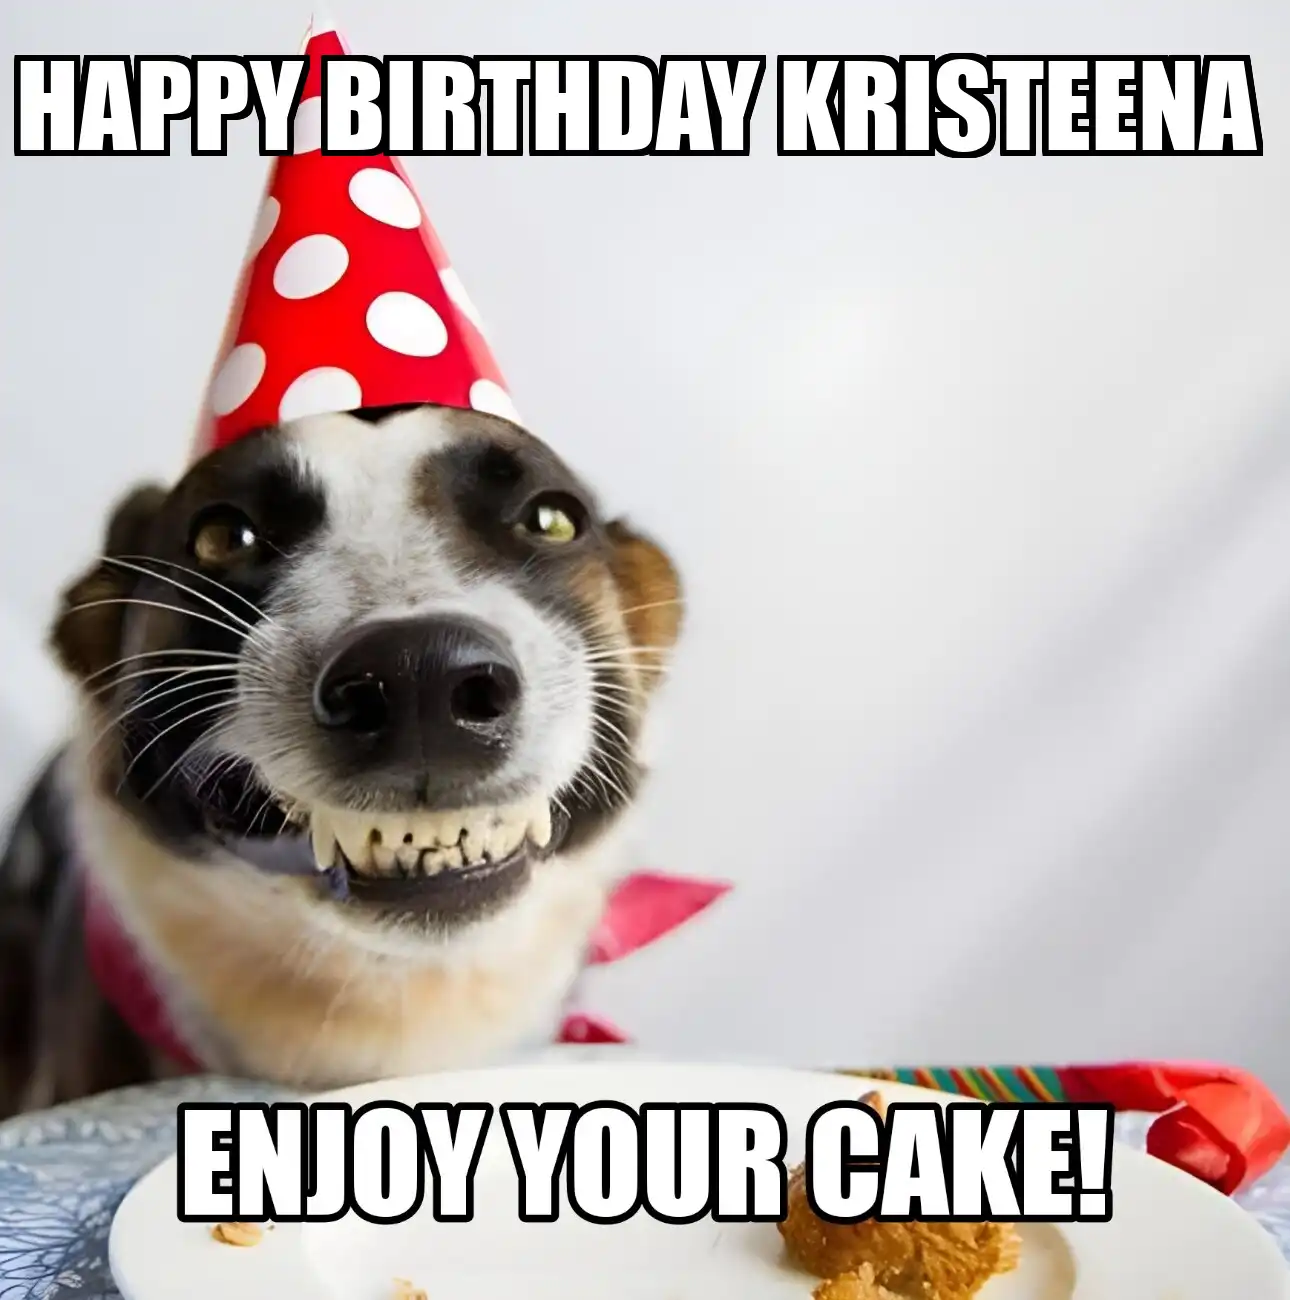 Happy Birthday Kristeena Enjoy Your Cake Dog Meme